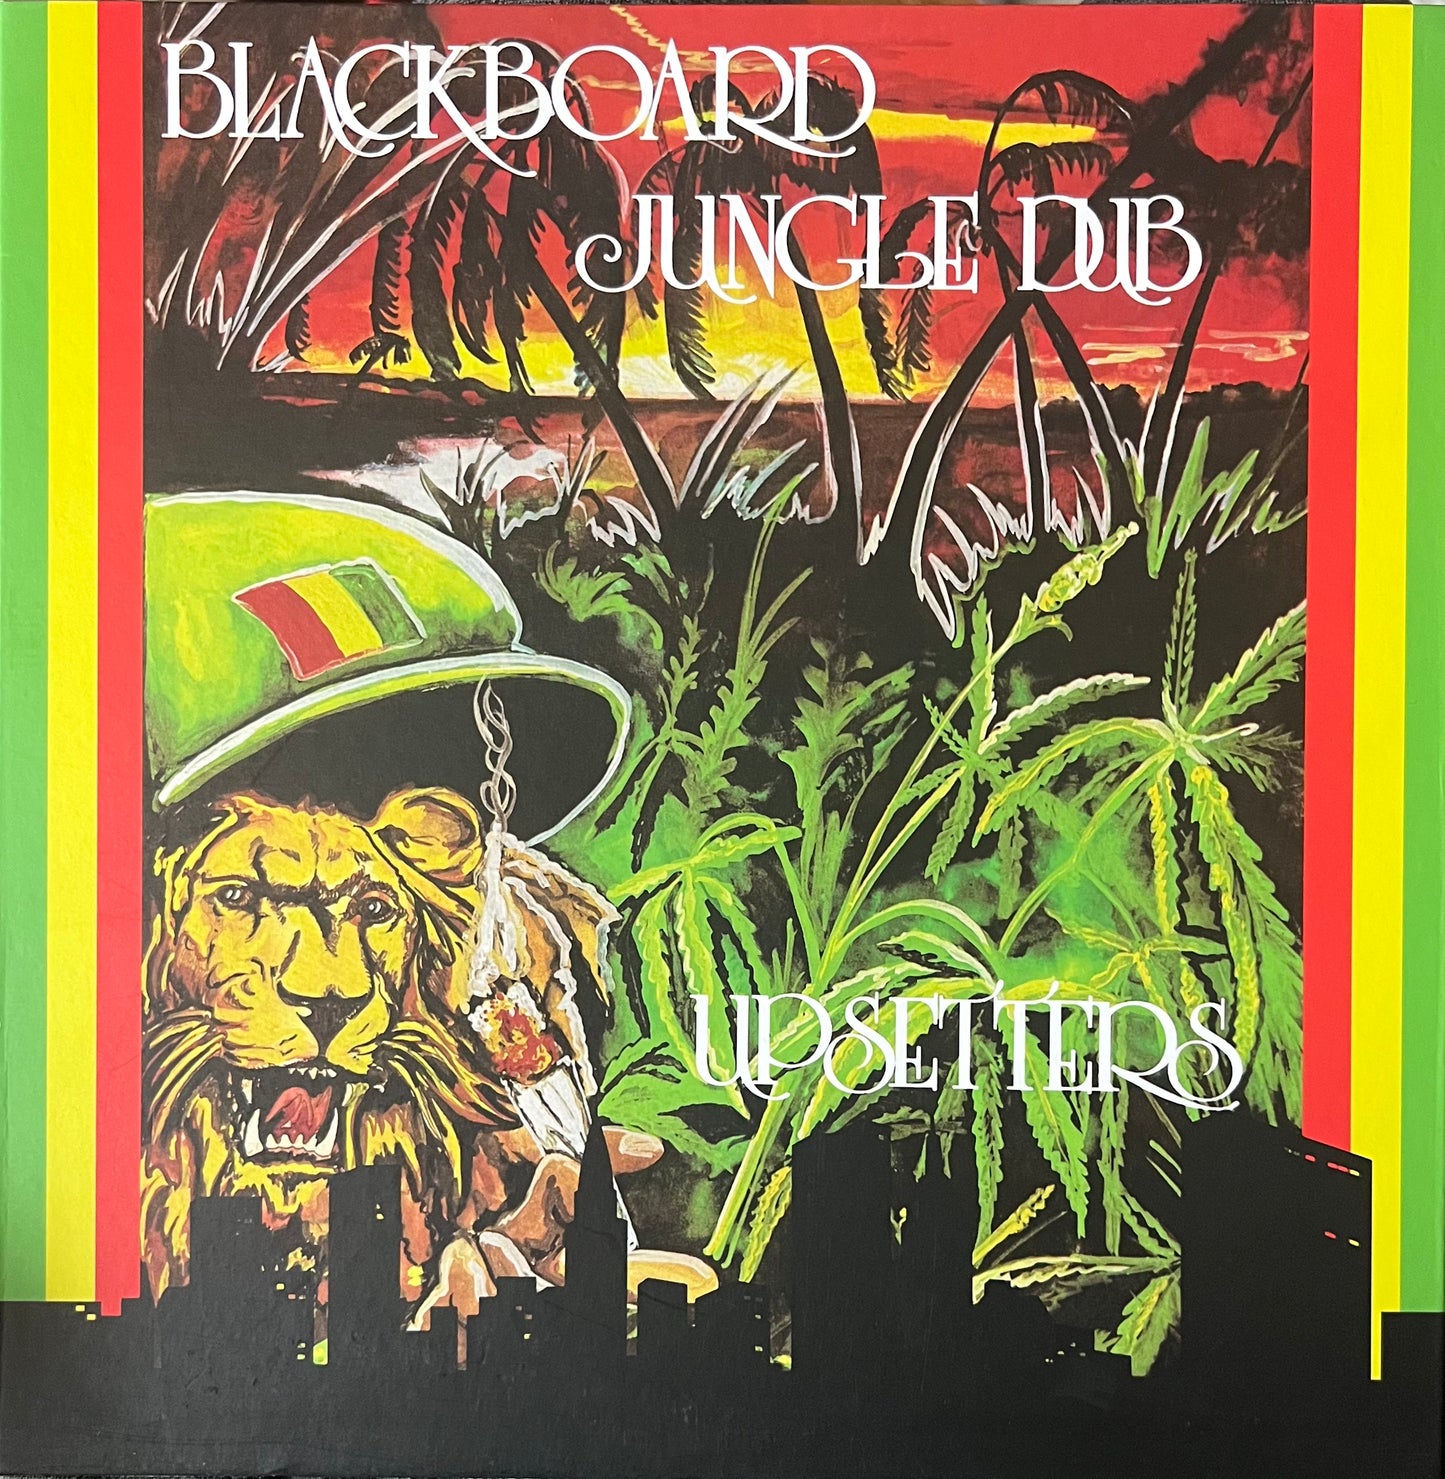 Lee Scratch Perry & The Upsetters - Blackboard Jungle Dub (RSD)